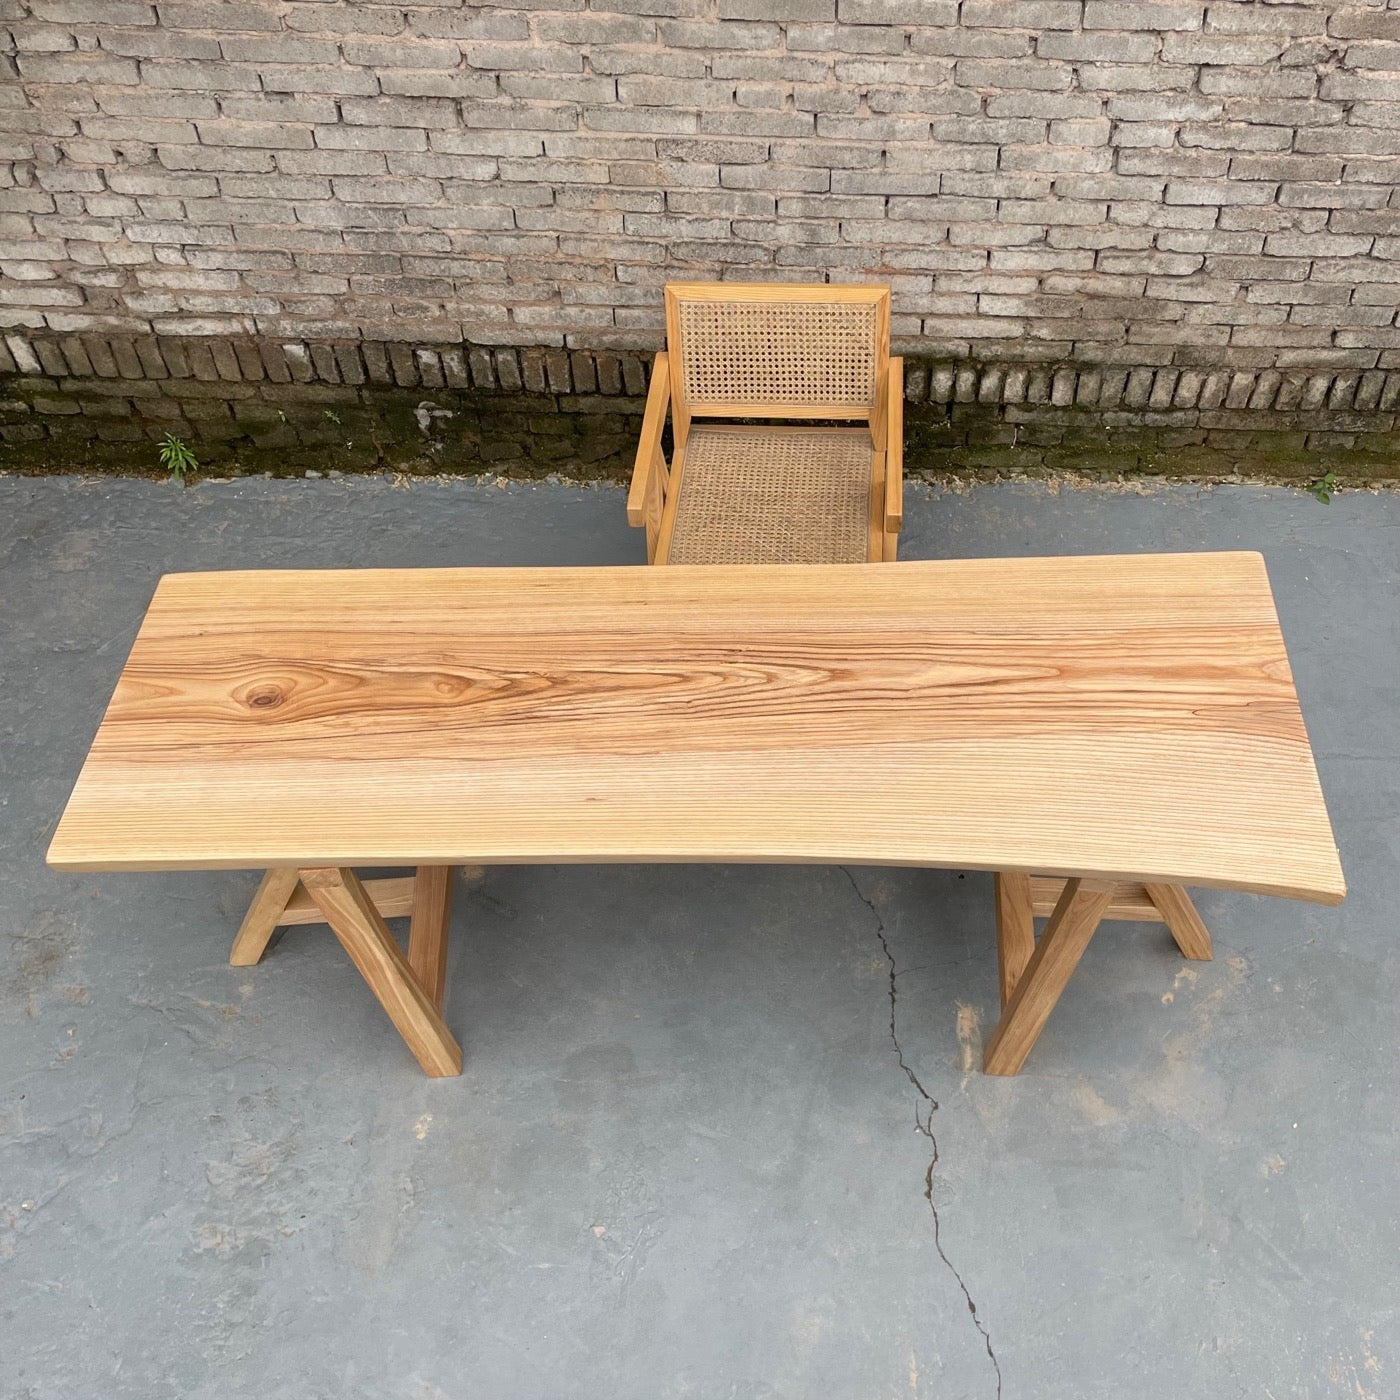 Ash slab coffee table, North American Ash wood slab